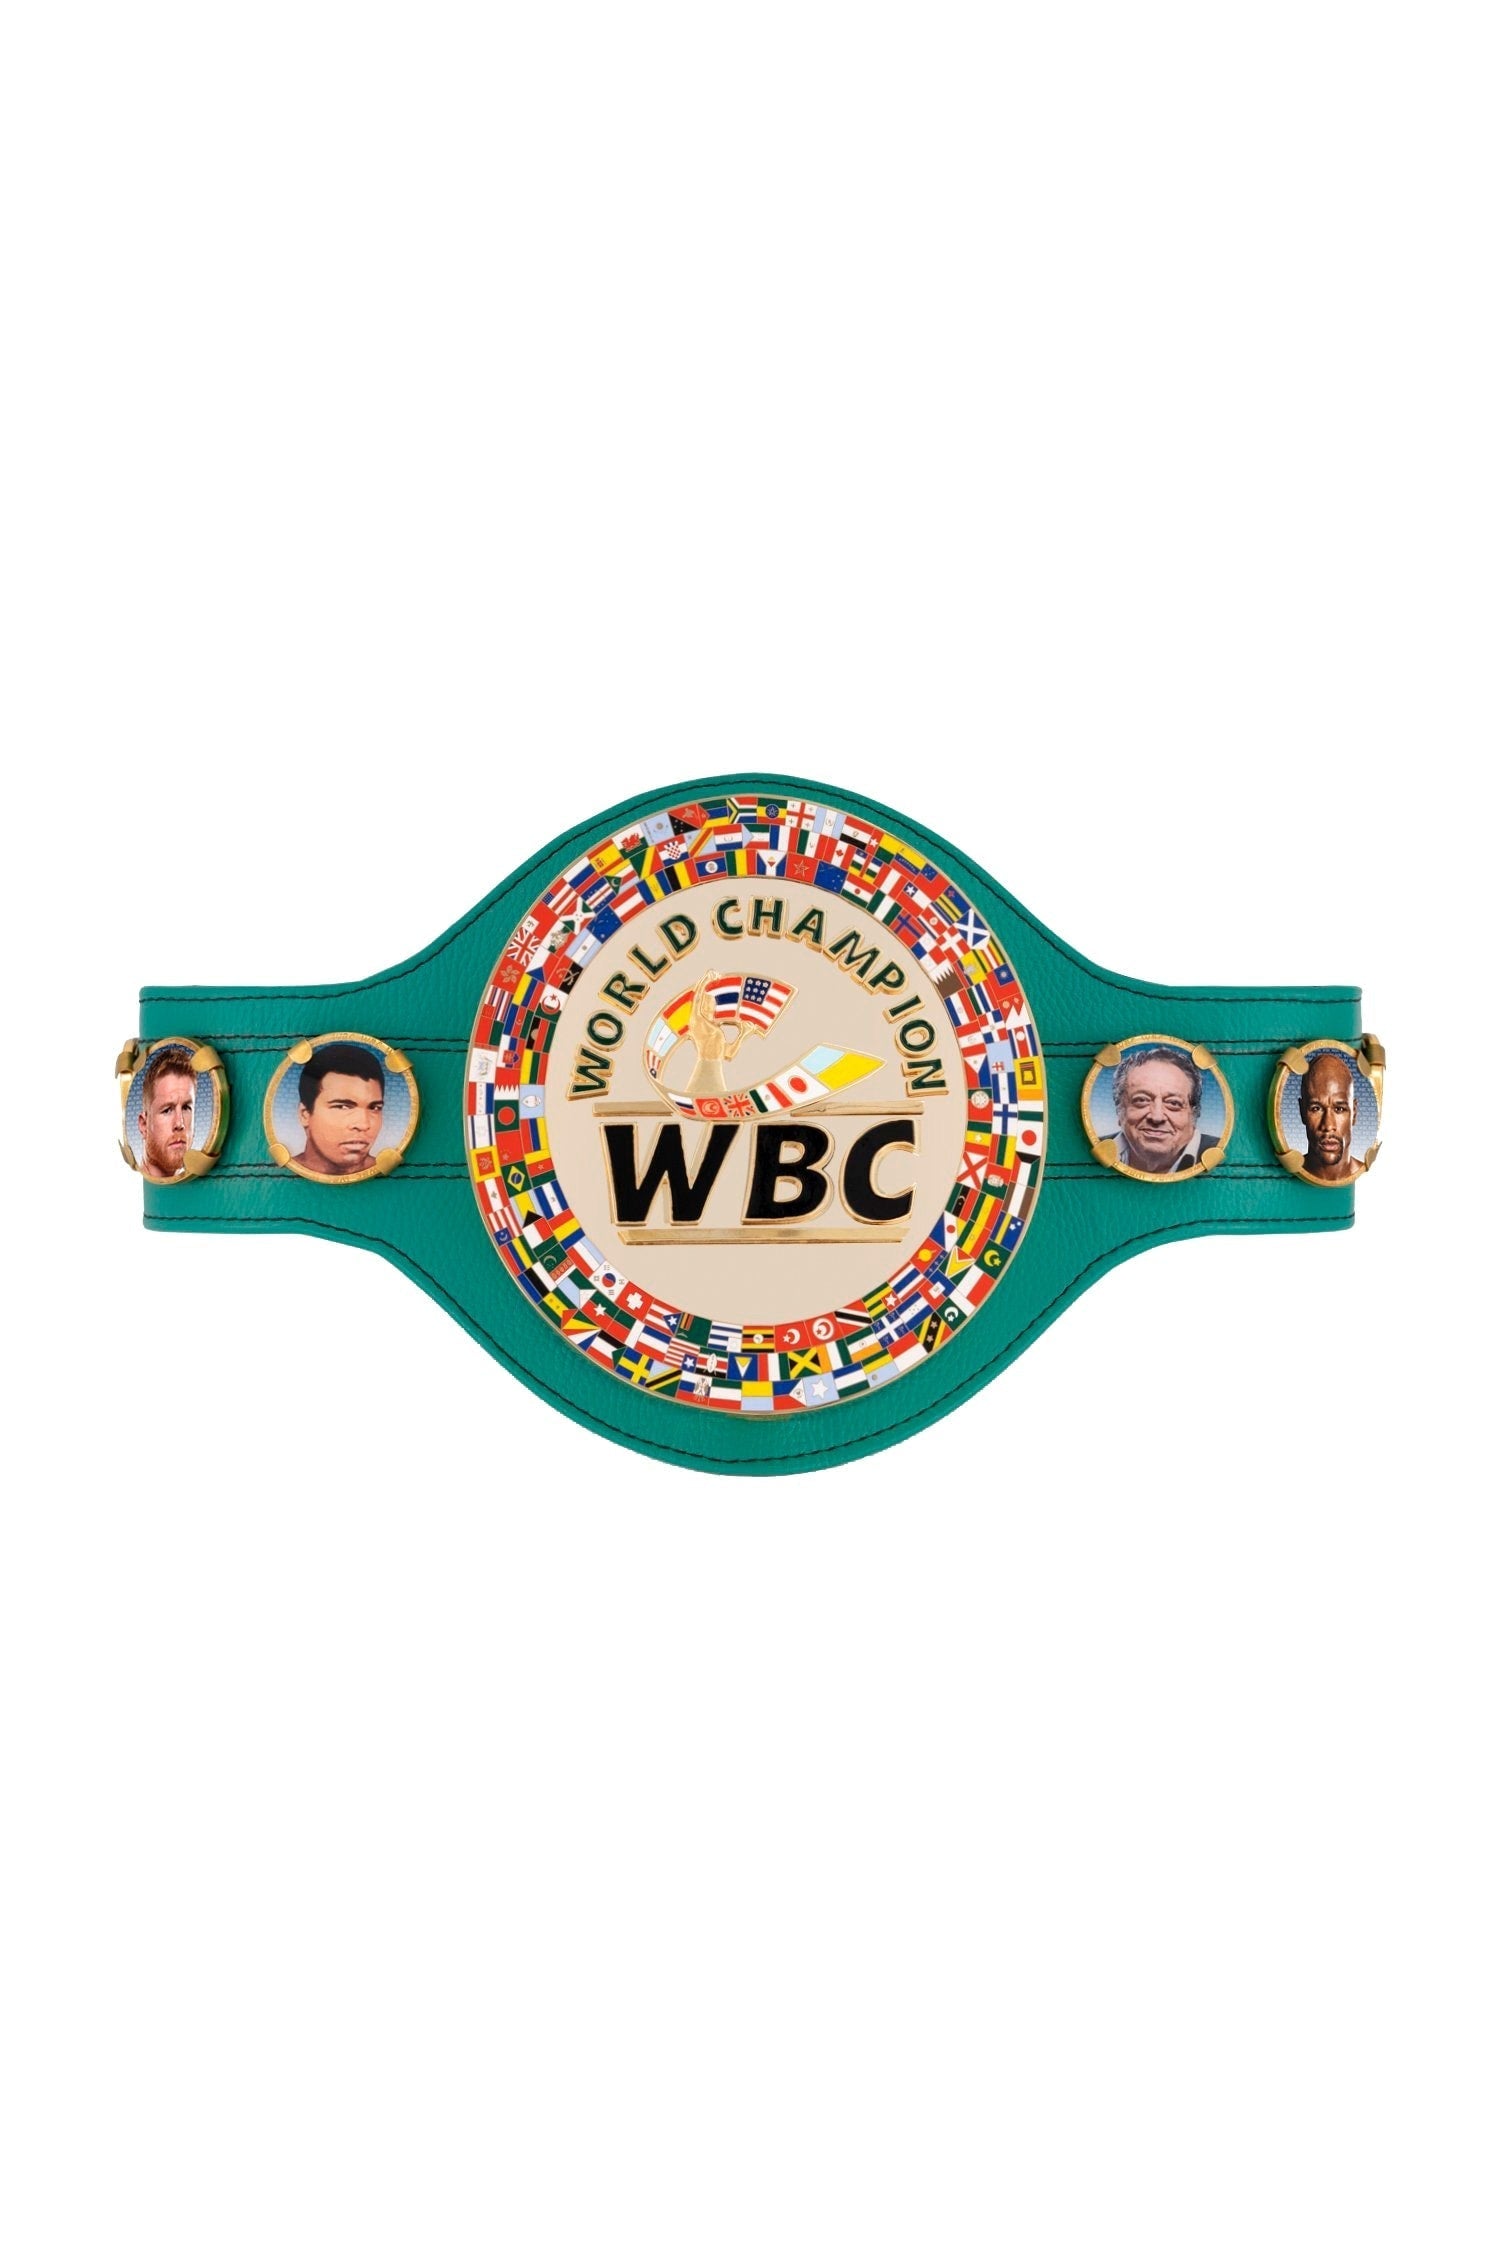 WBC Store Replica Belts WBC - Championship Belt "Historic Fights" Saúl “Canelo” Álvarez vs. Floyd Mayweather Jr.